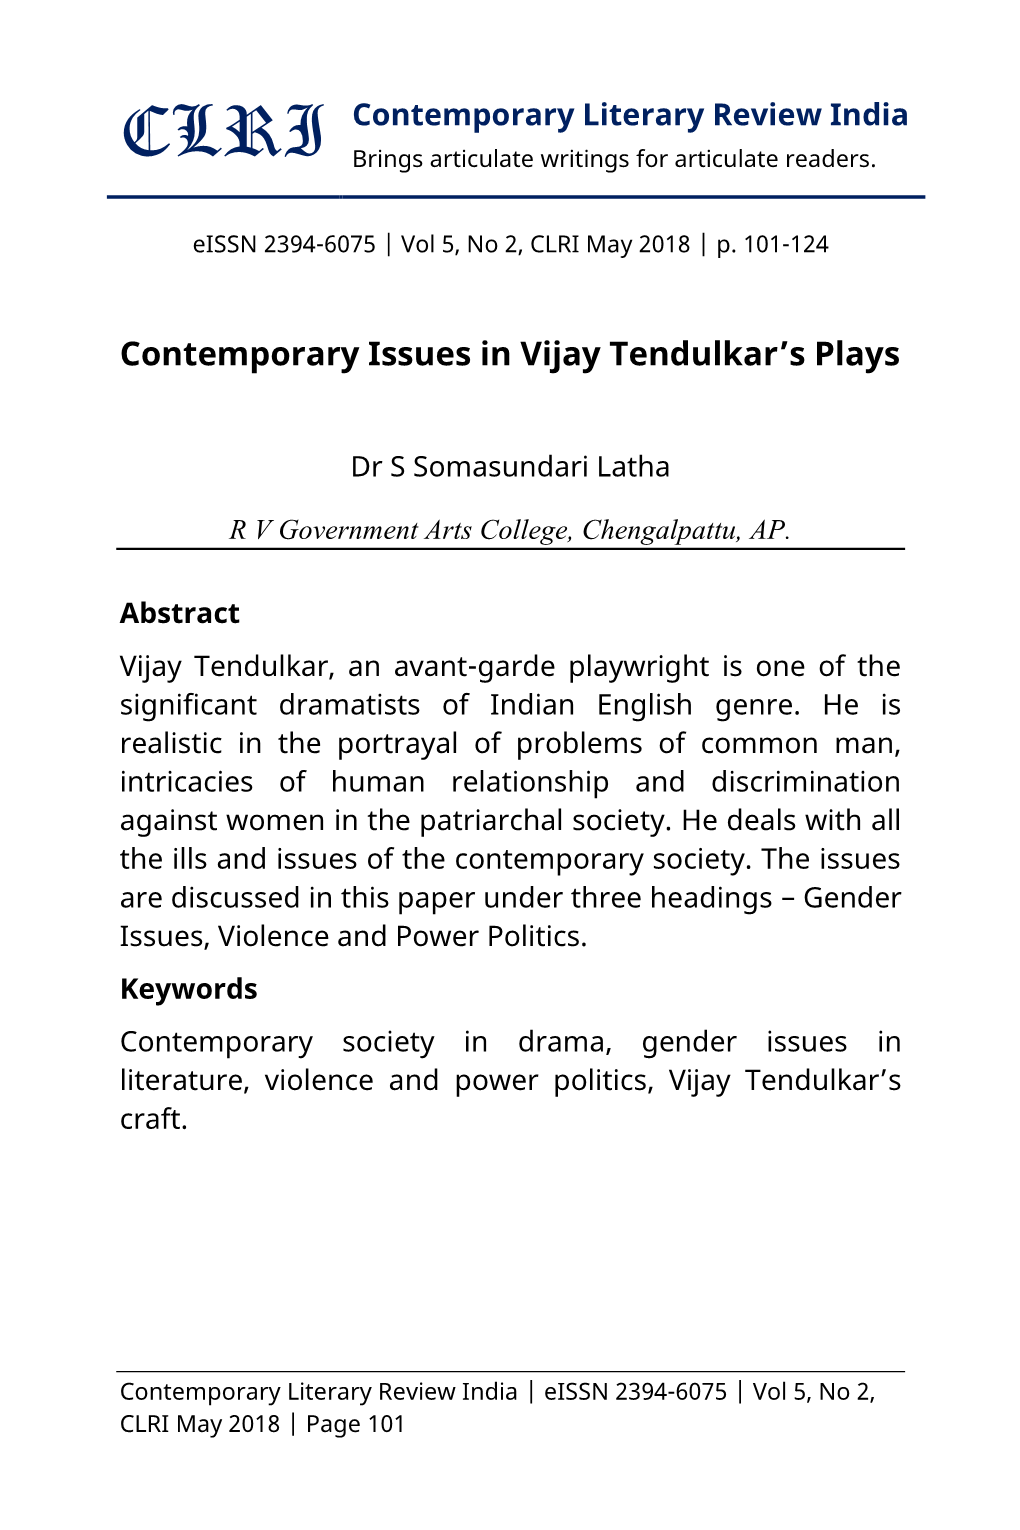 Contemporary Issues in Vijay Tendulkar's Plays